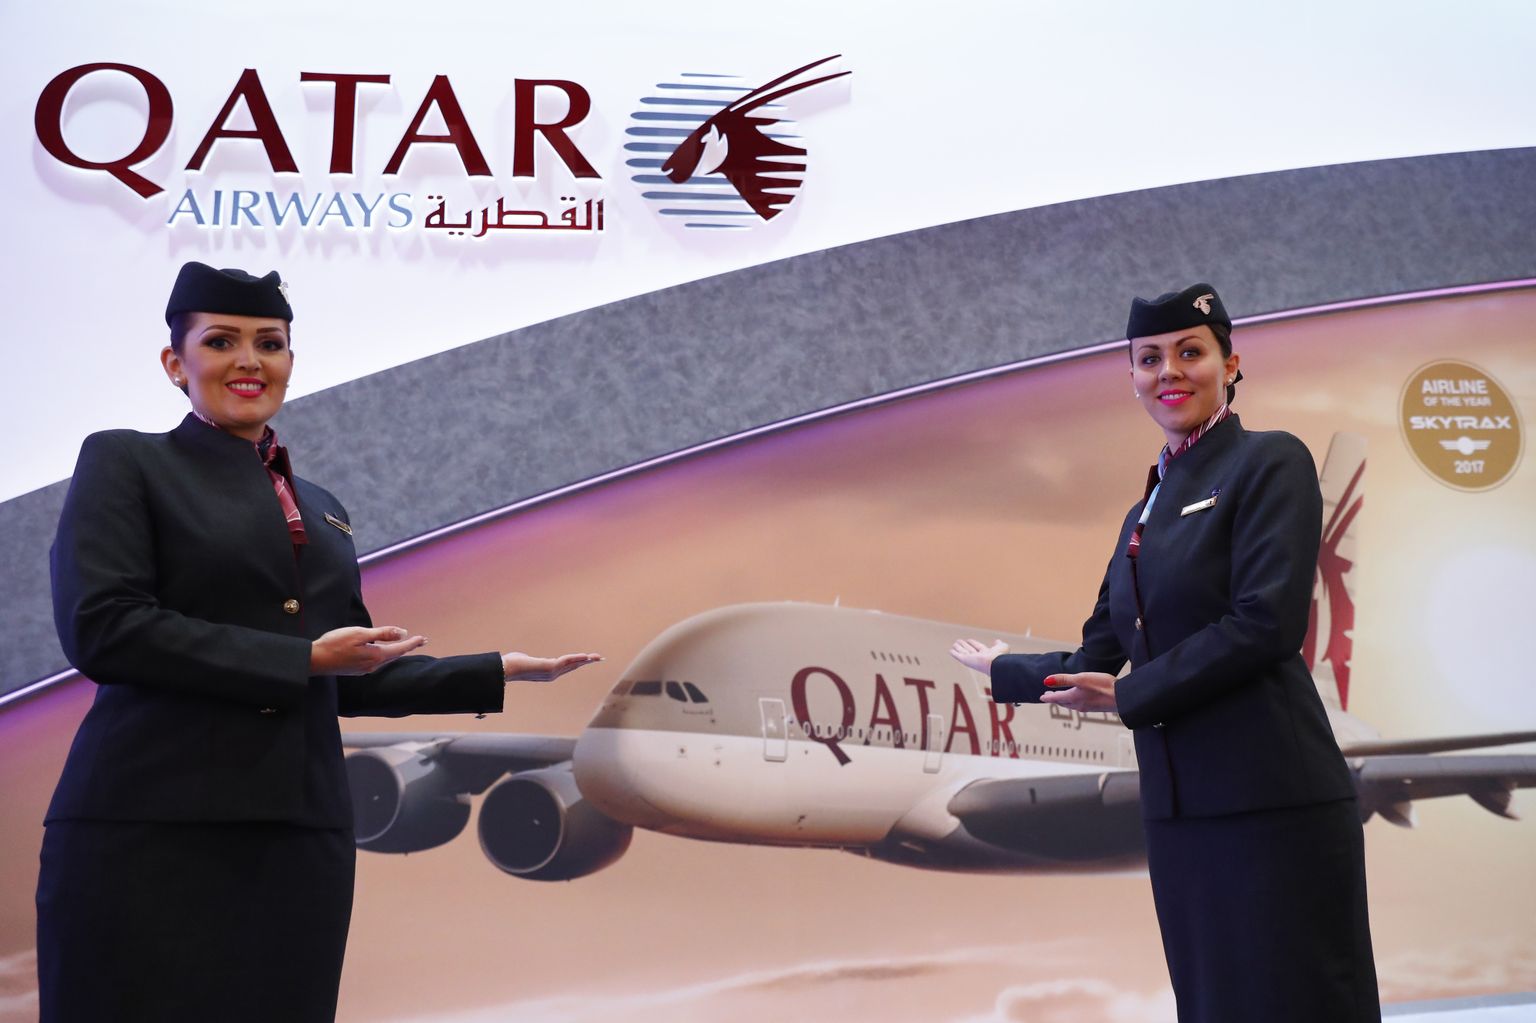 Qatar Airways 2018. aastal ITB messil oma toodet esitlemas.  REUTERS/Fabrizio Bensch